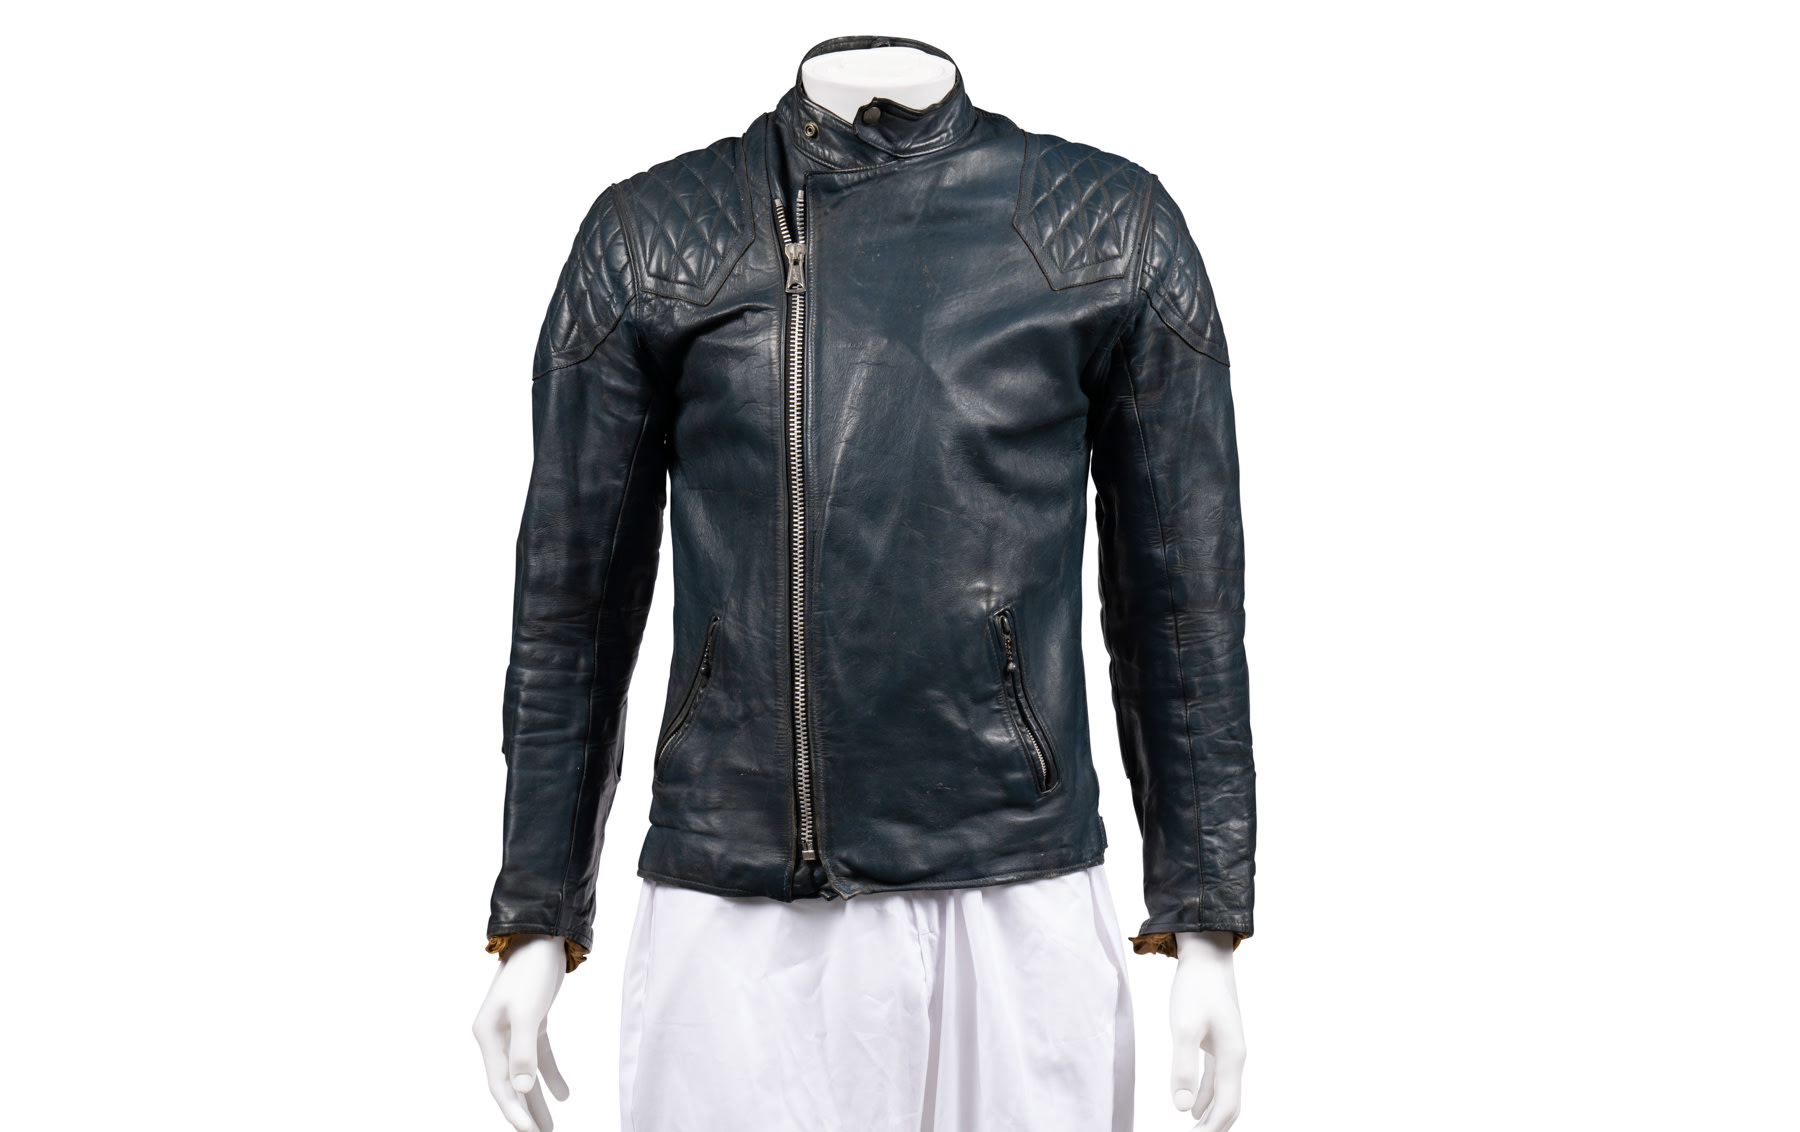 Highwayman Leather Motorcycle Jacket